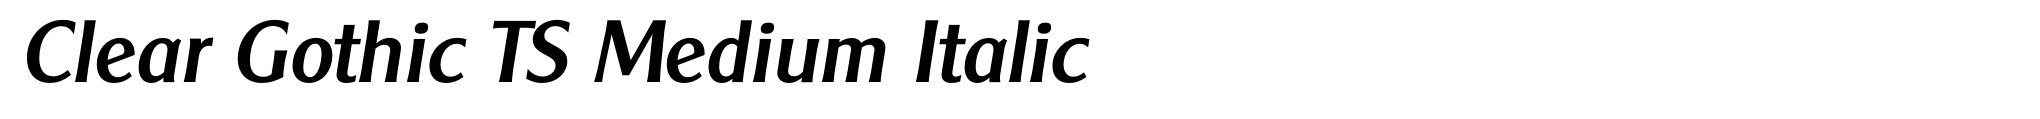 Clear Gothic TS Medium Italic image